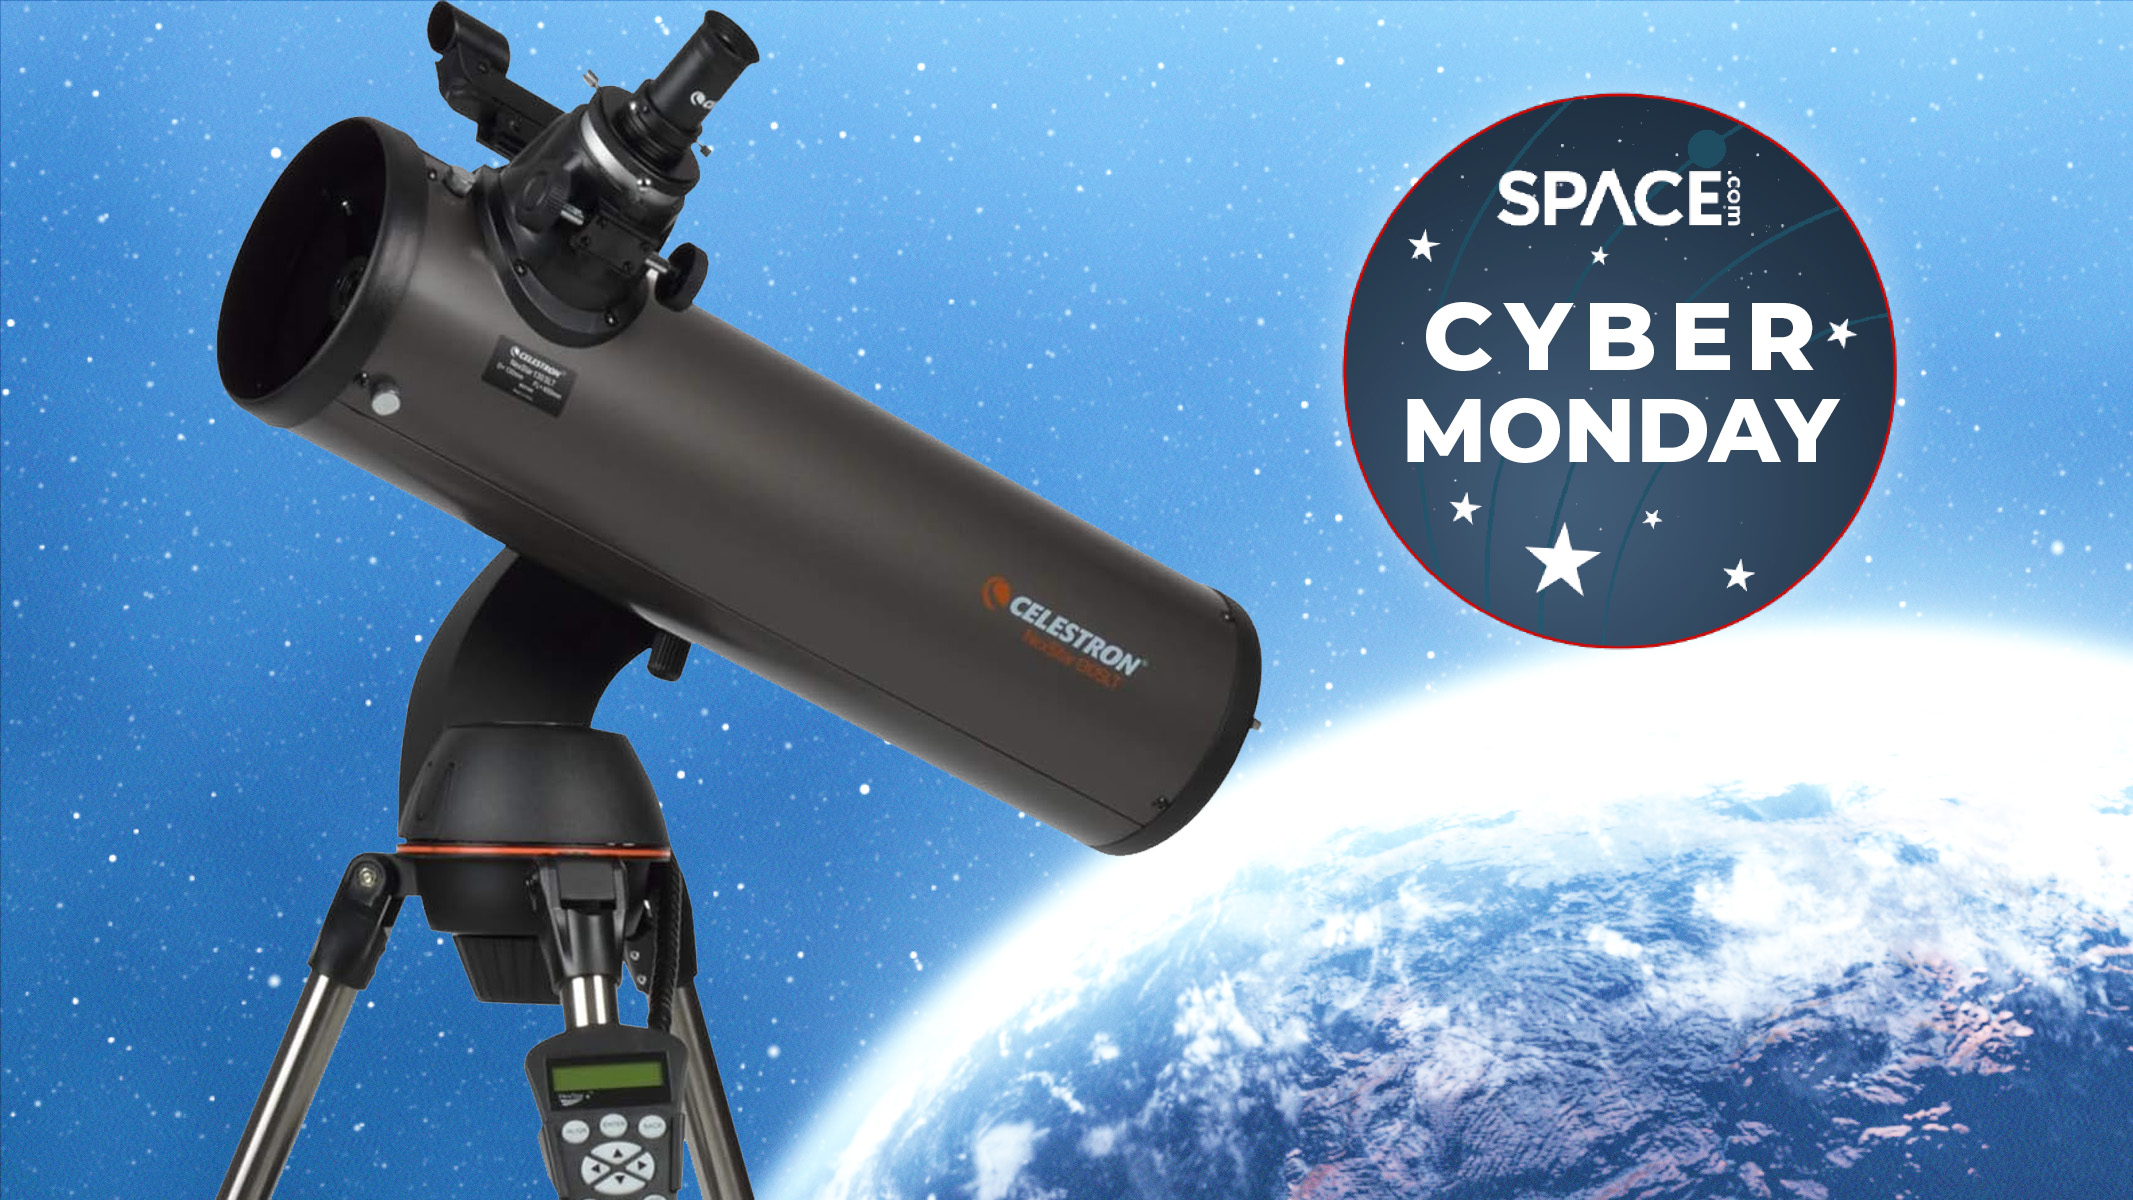 Save over $120 on the Celestron NexStar 130 SLT telescope this Cyber Monday